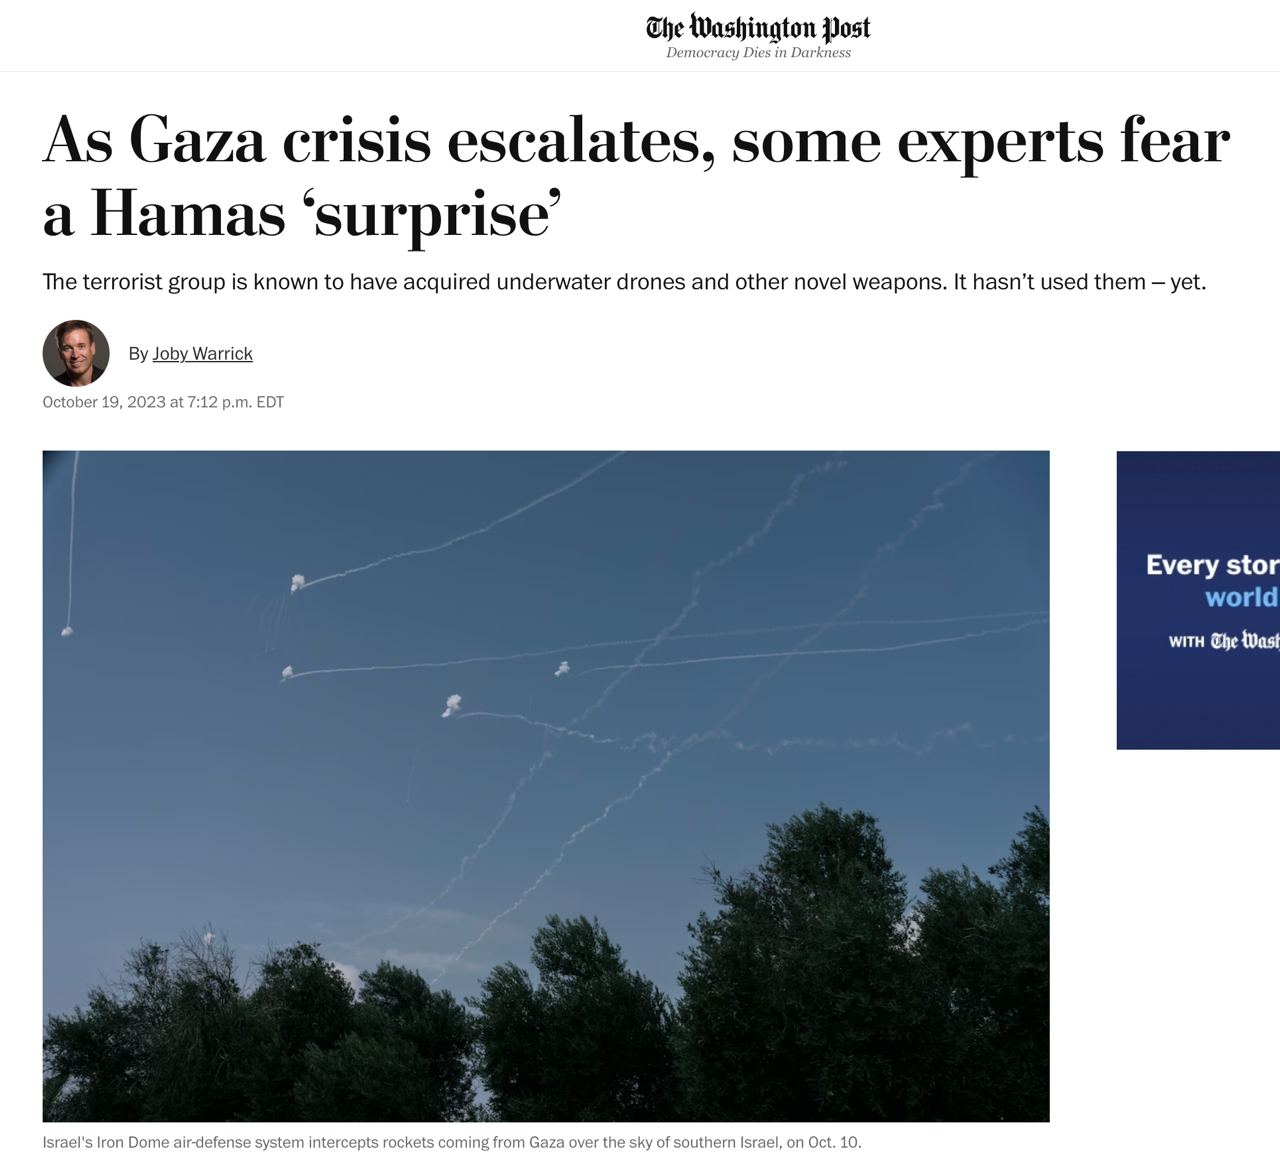 ХАМАС може готувати сюрприз для ЦАХАЛ